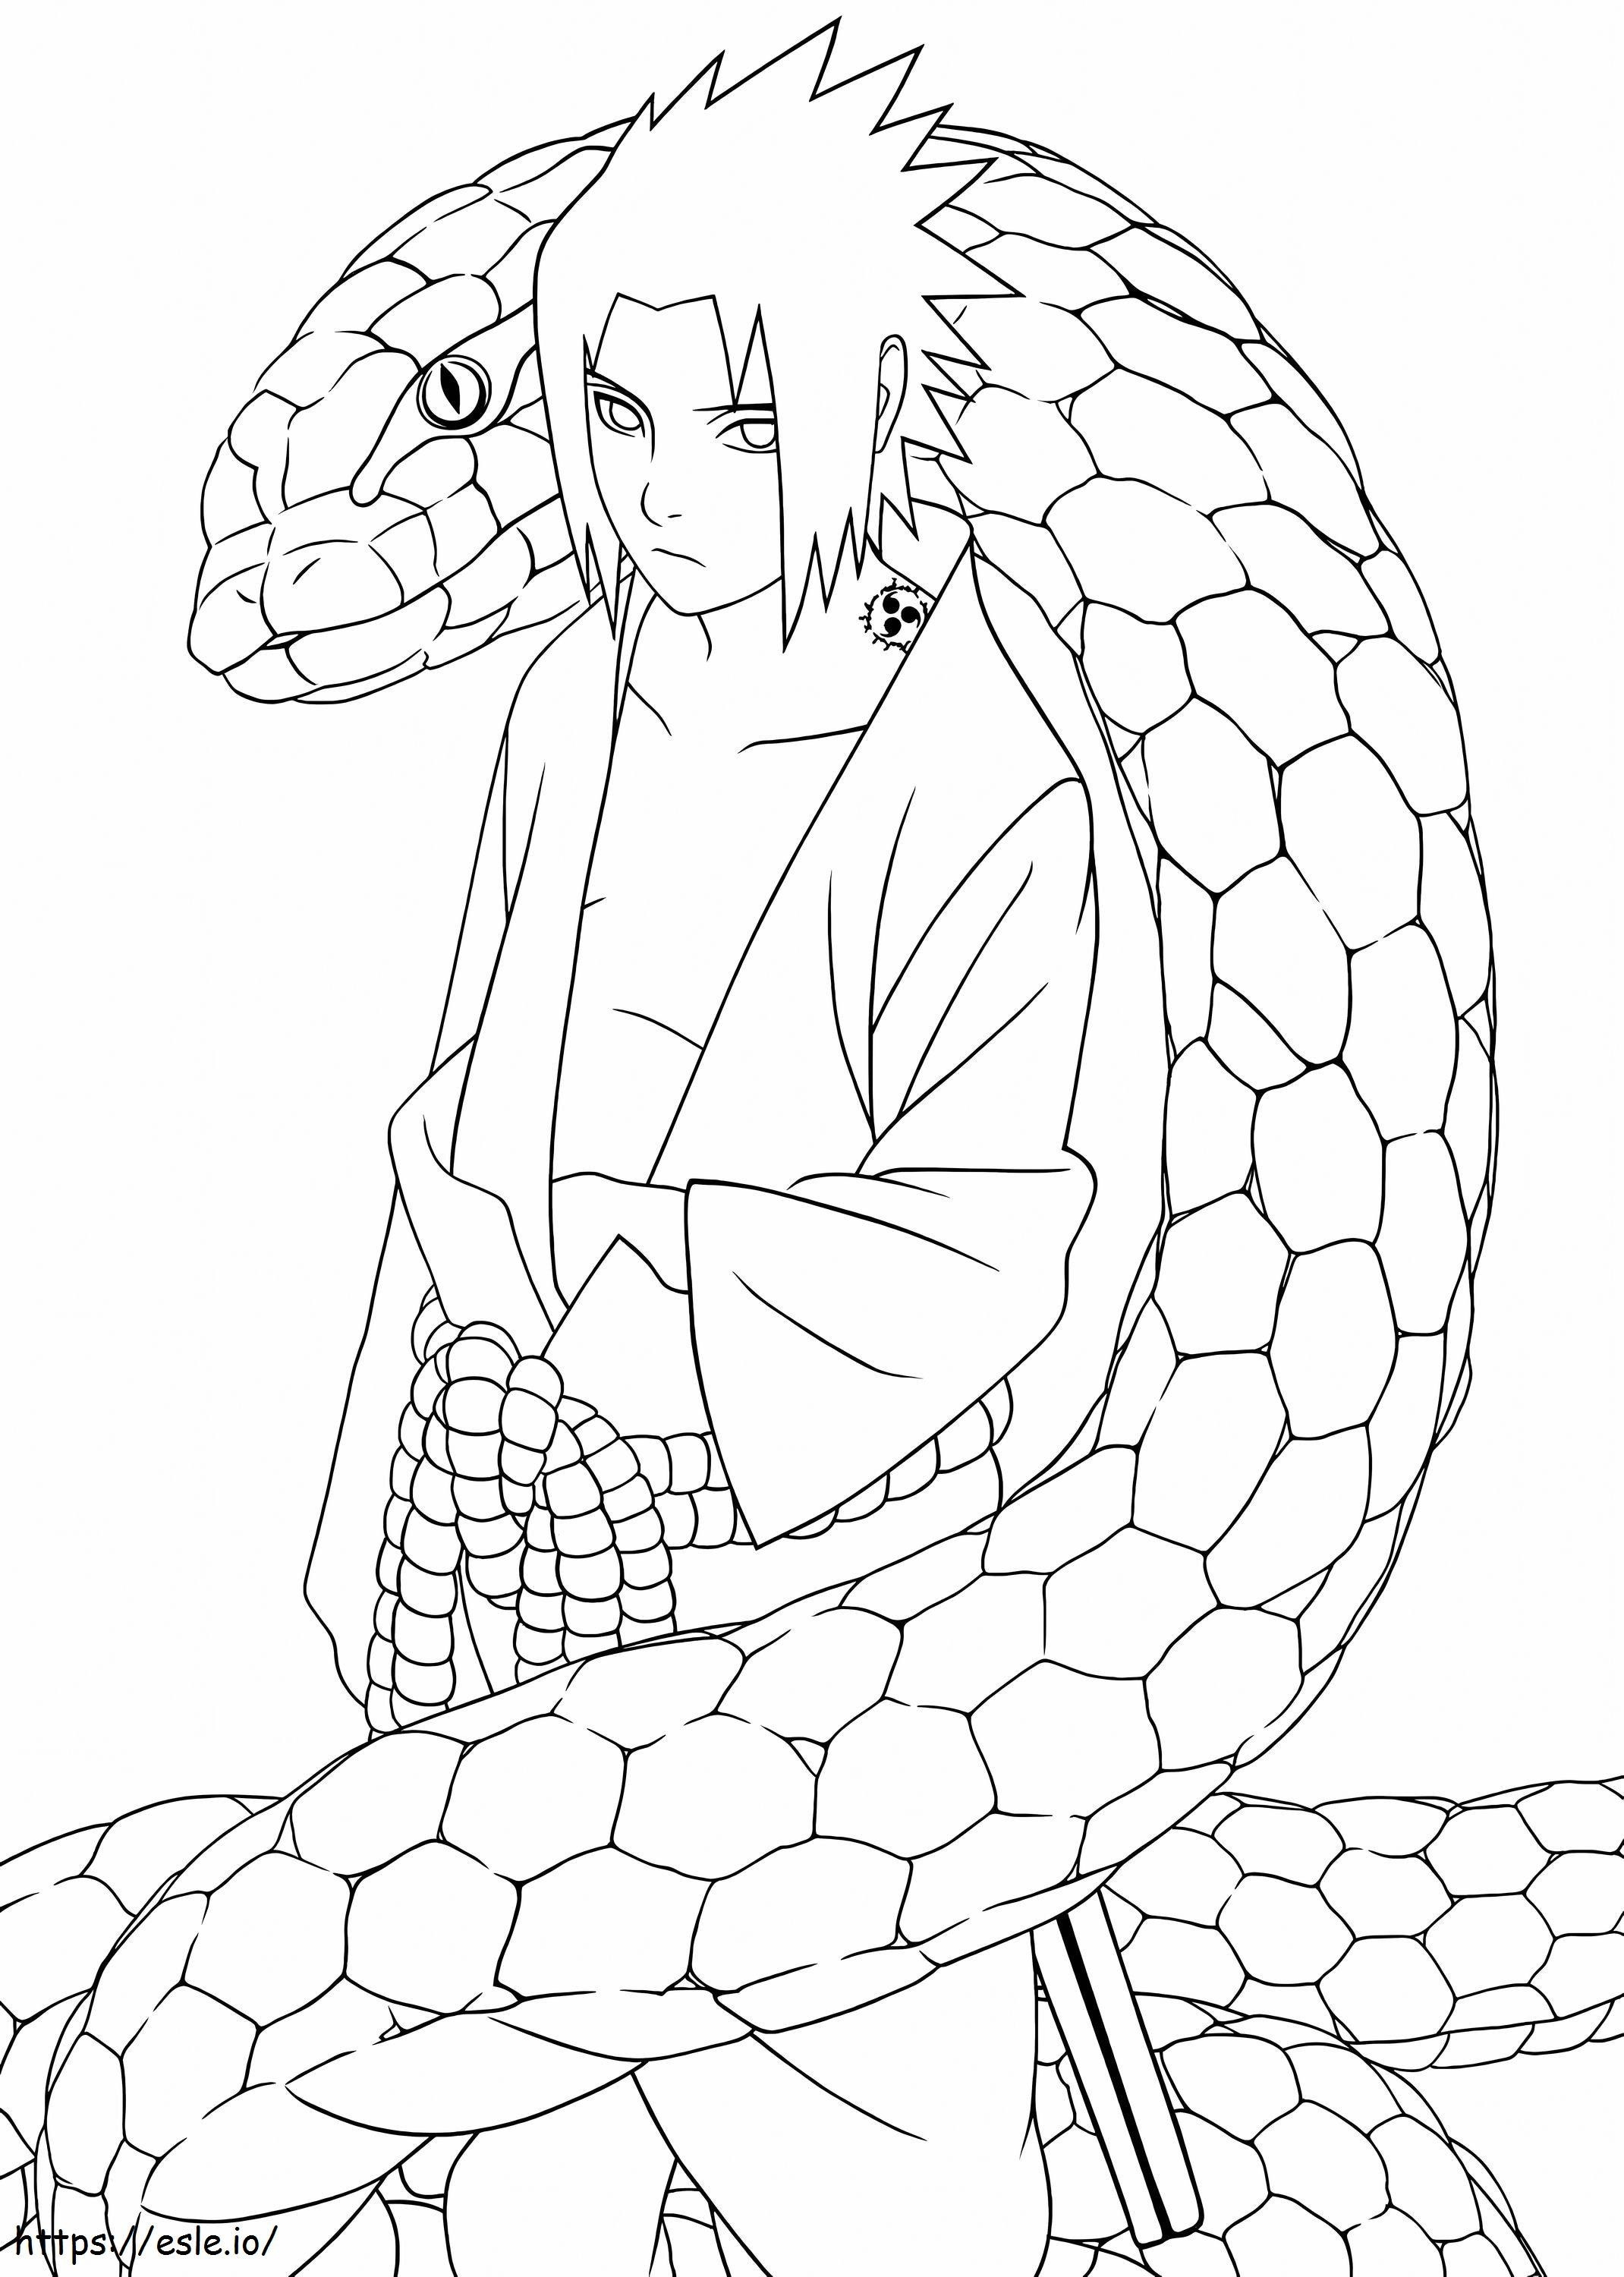 Sasuke i wąż kolorowanka